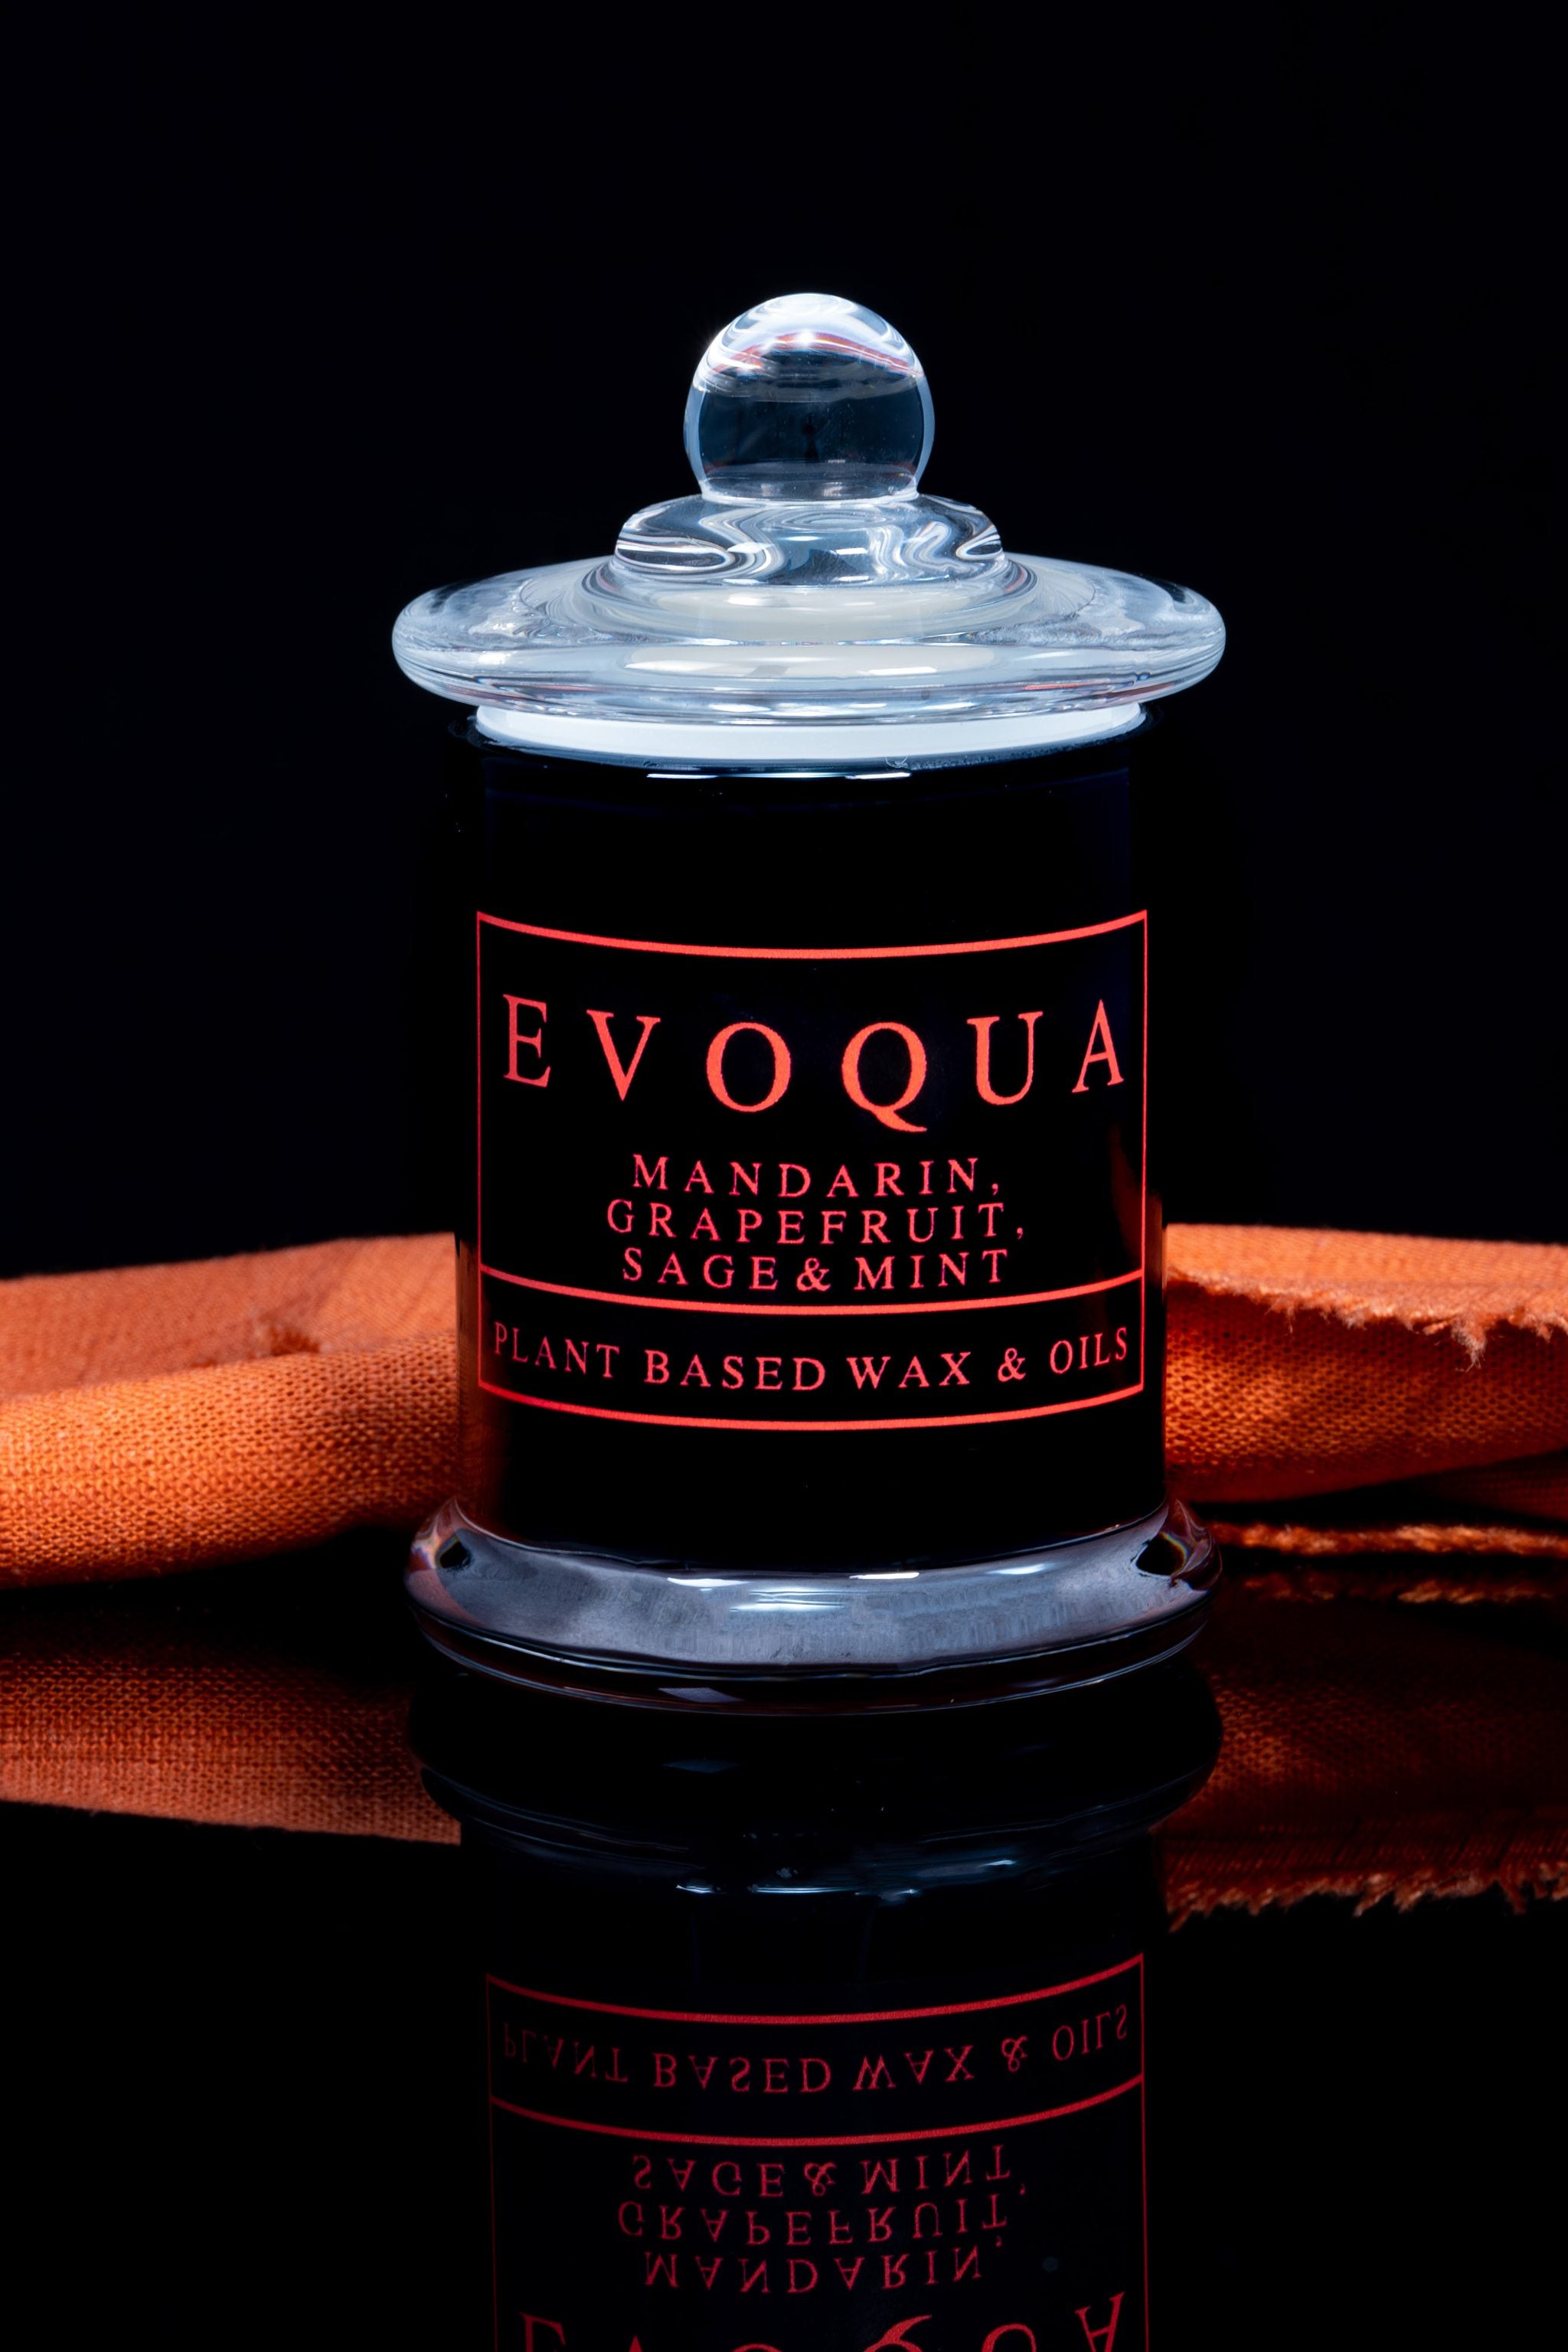 Evoqua 3 Piece Scented Candle Gift Set - Ginger Lily, Ylang-Ylang / Eucalyptus, Lemon, Mint / Mandarin, Grapefruit, Sage, Mint